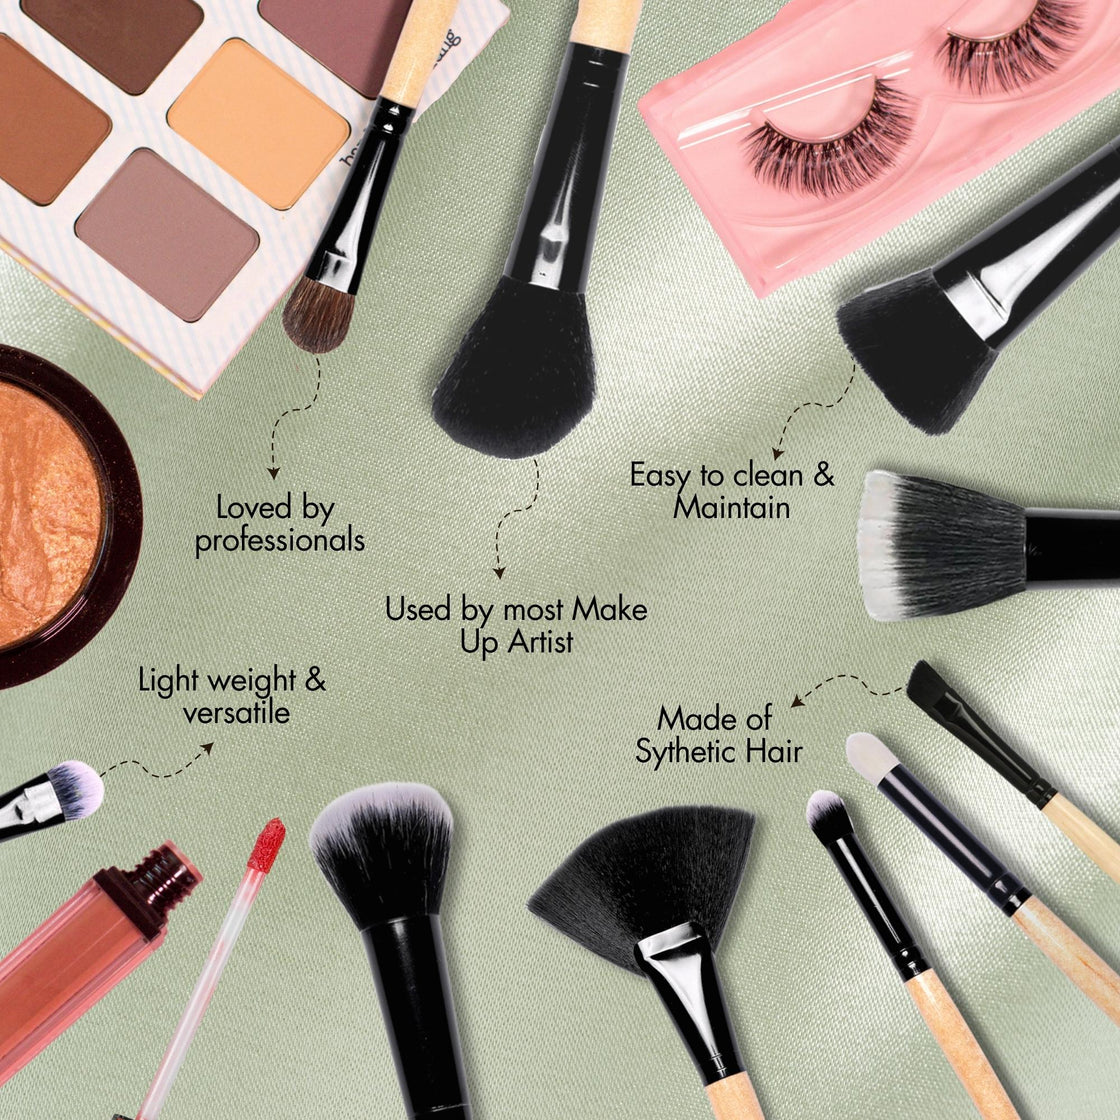 Allure Mascara and Eye Groomer Makeup Brush